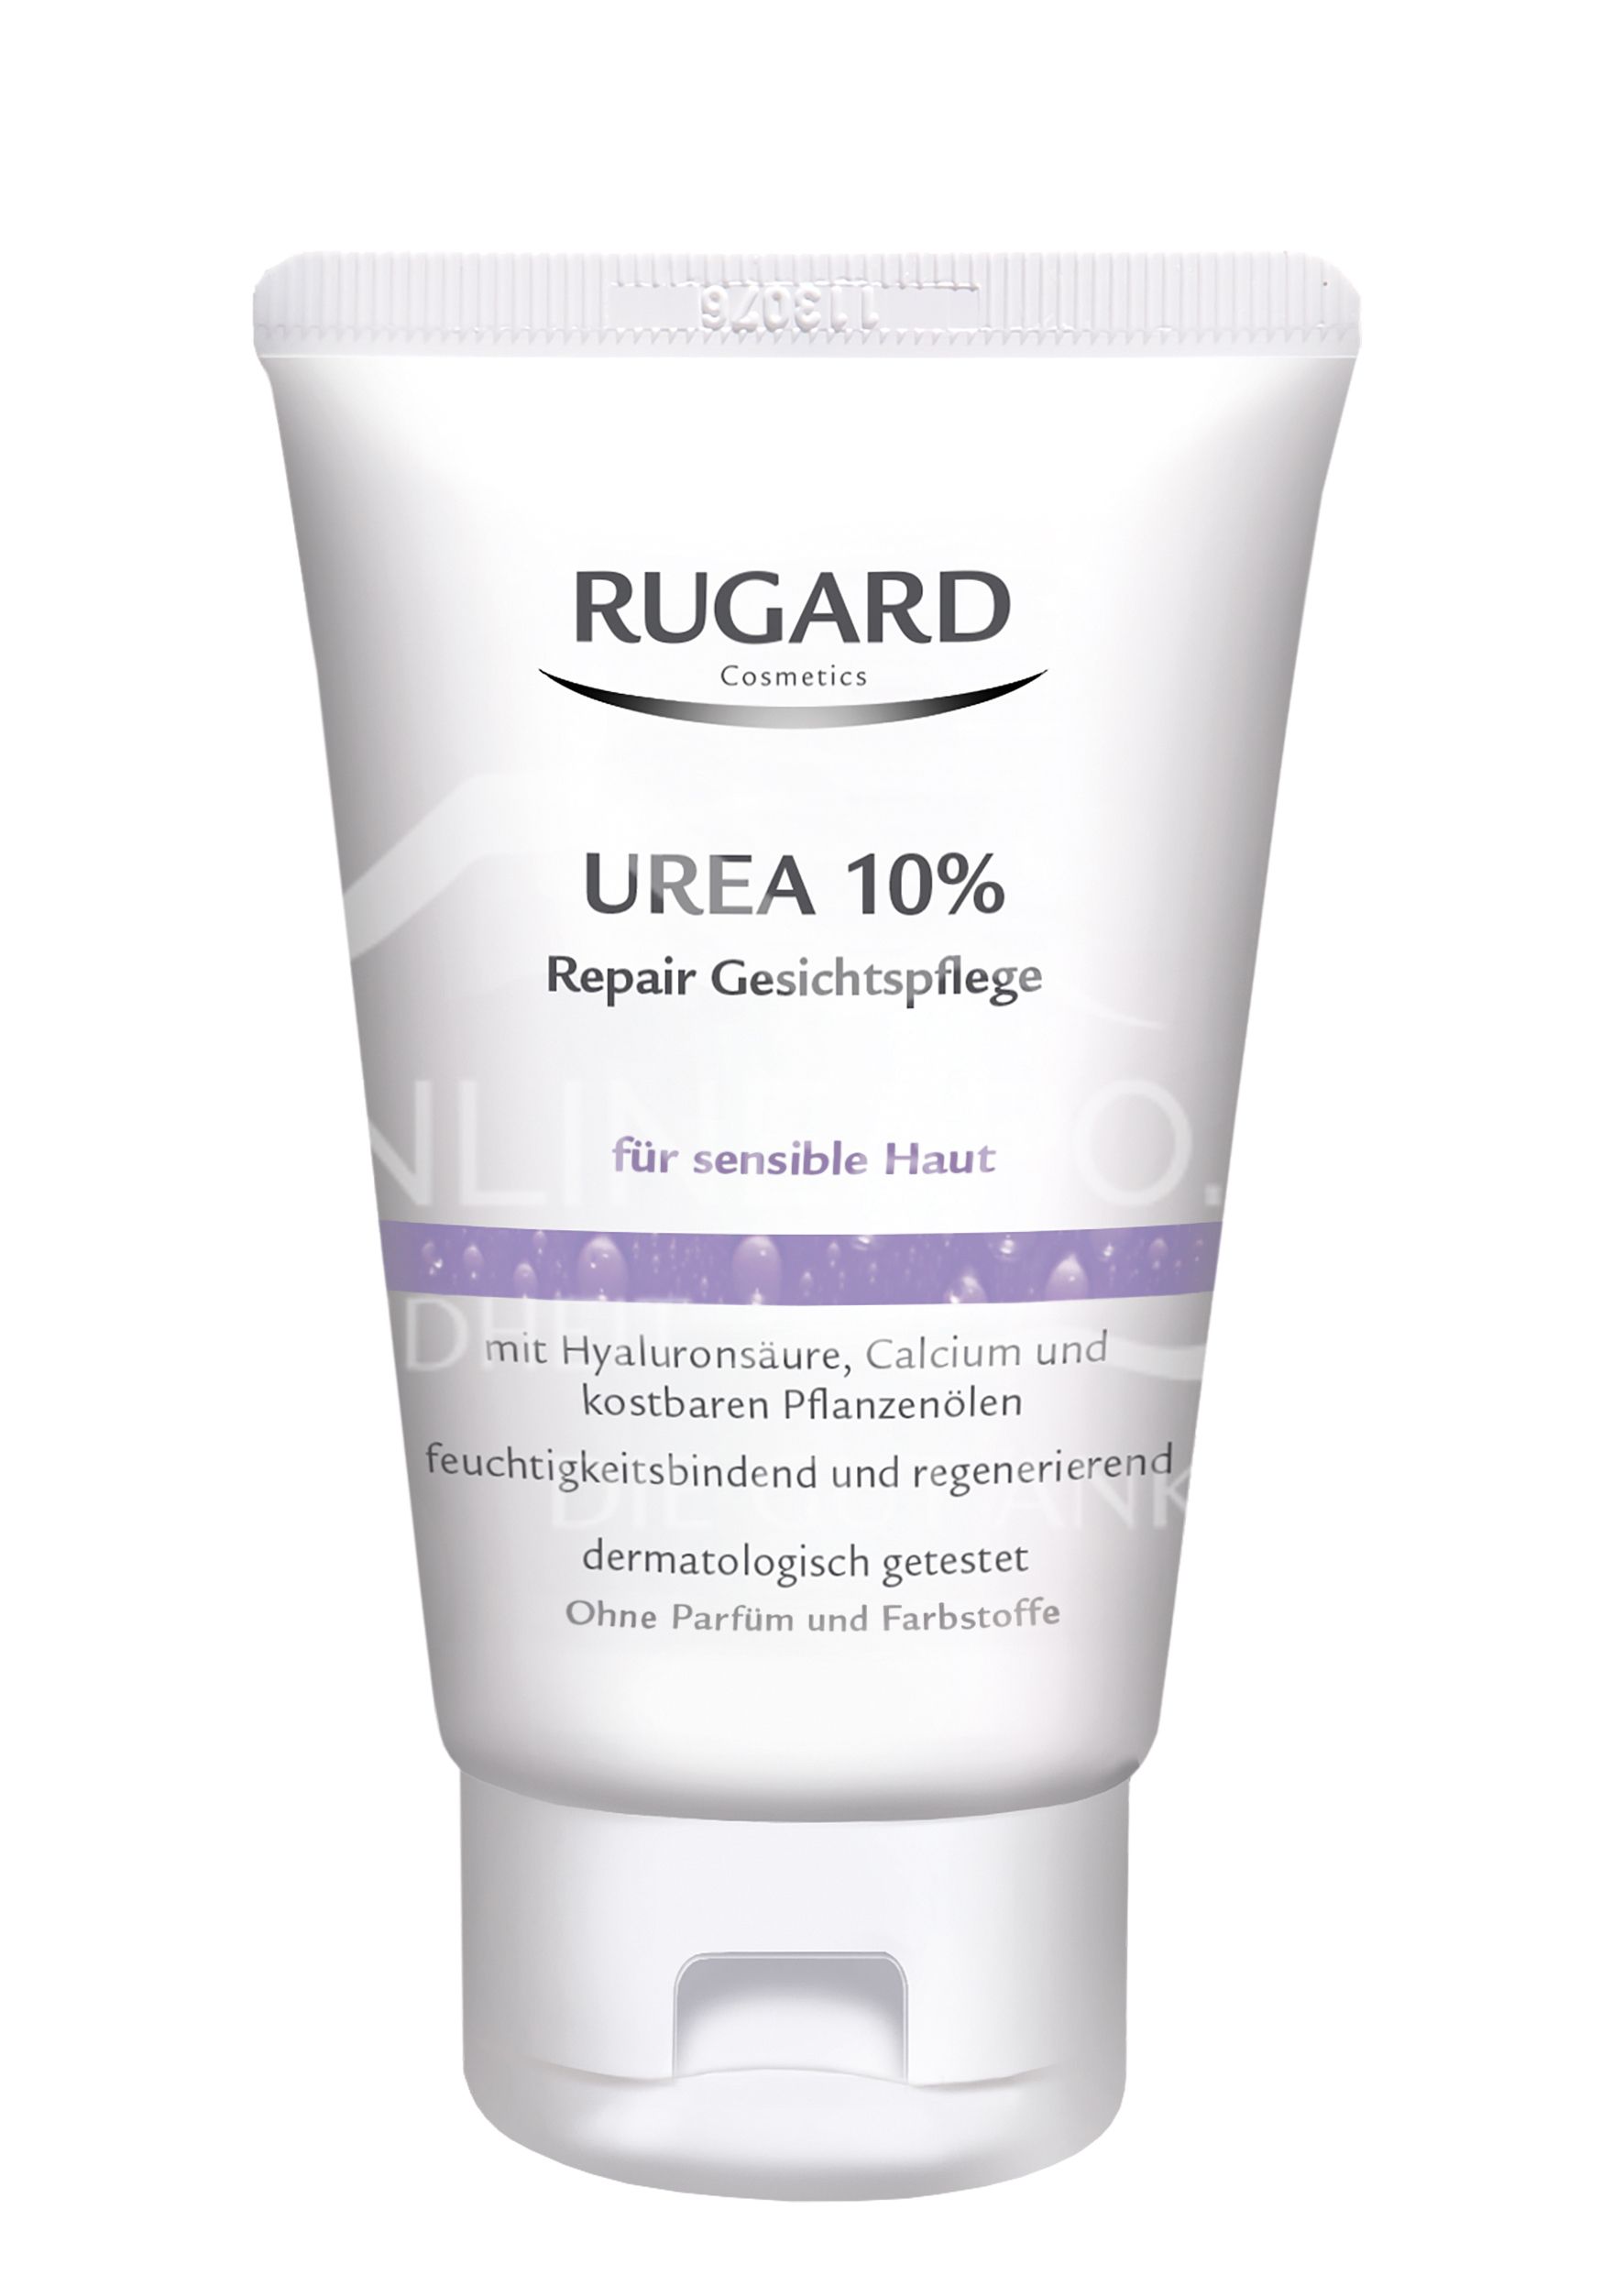 Rugard Urea 10% Repair Gesichtspflege